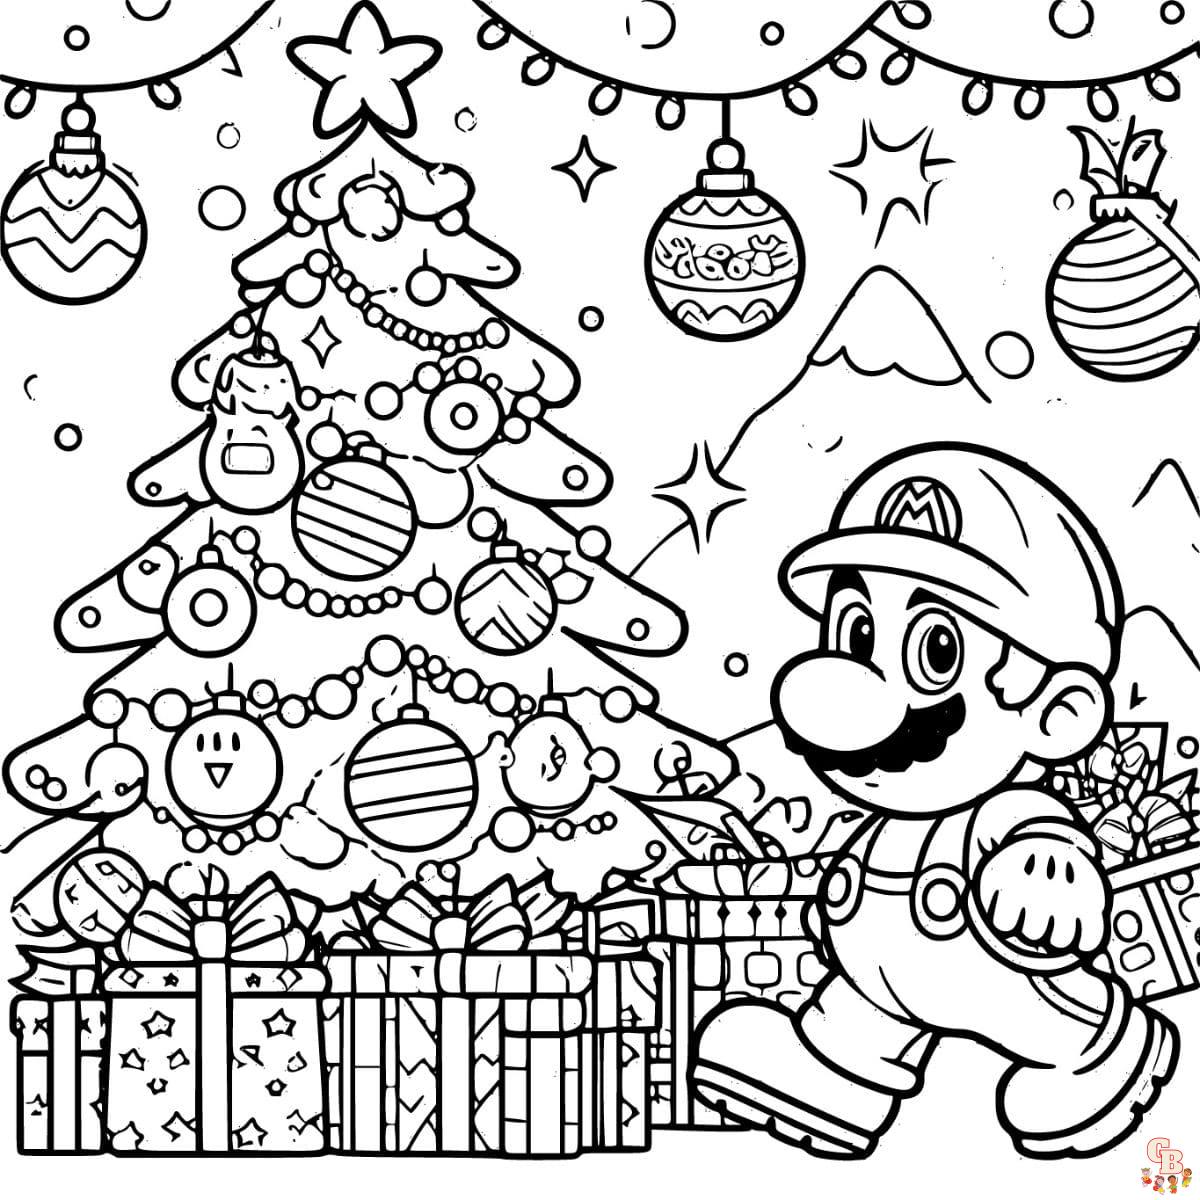 Mario and Christmas Tree